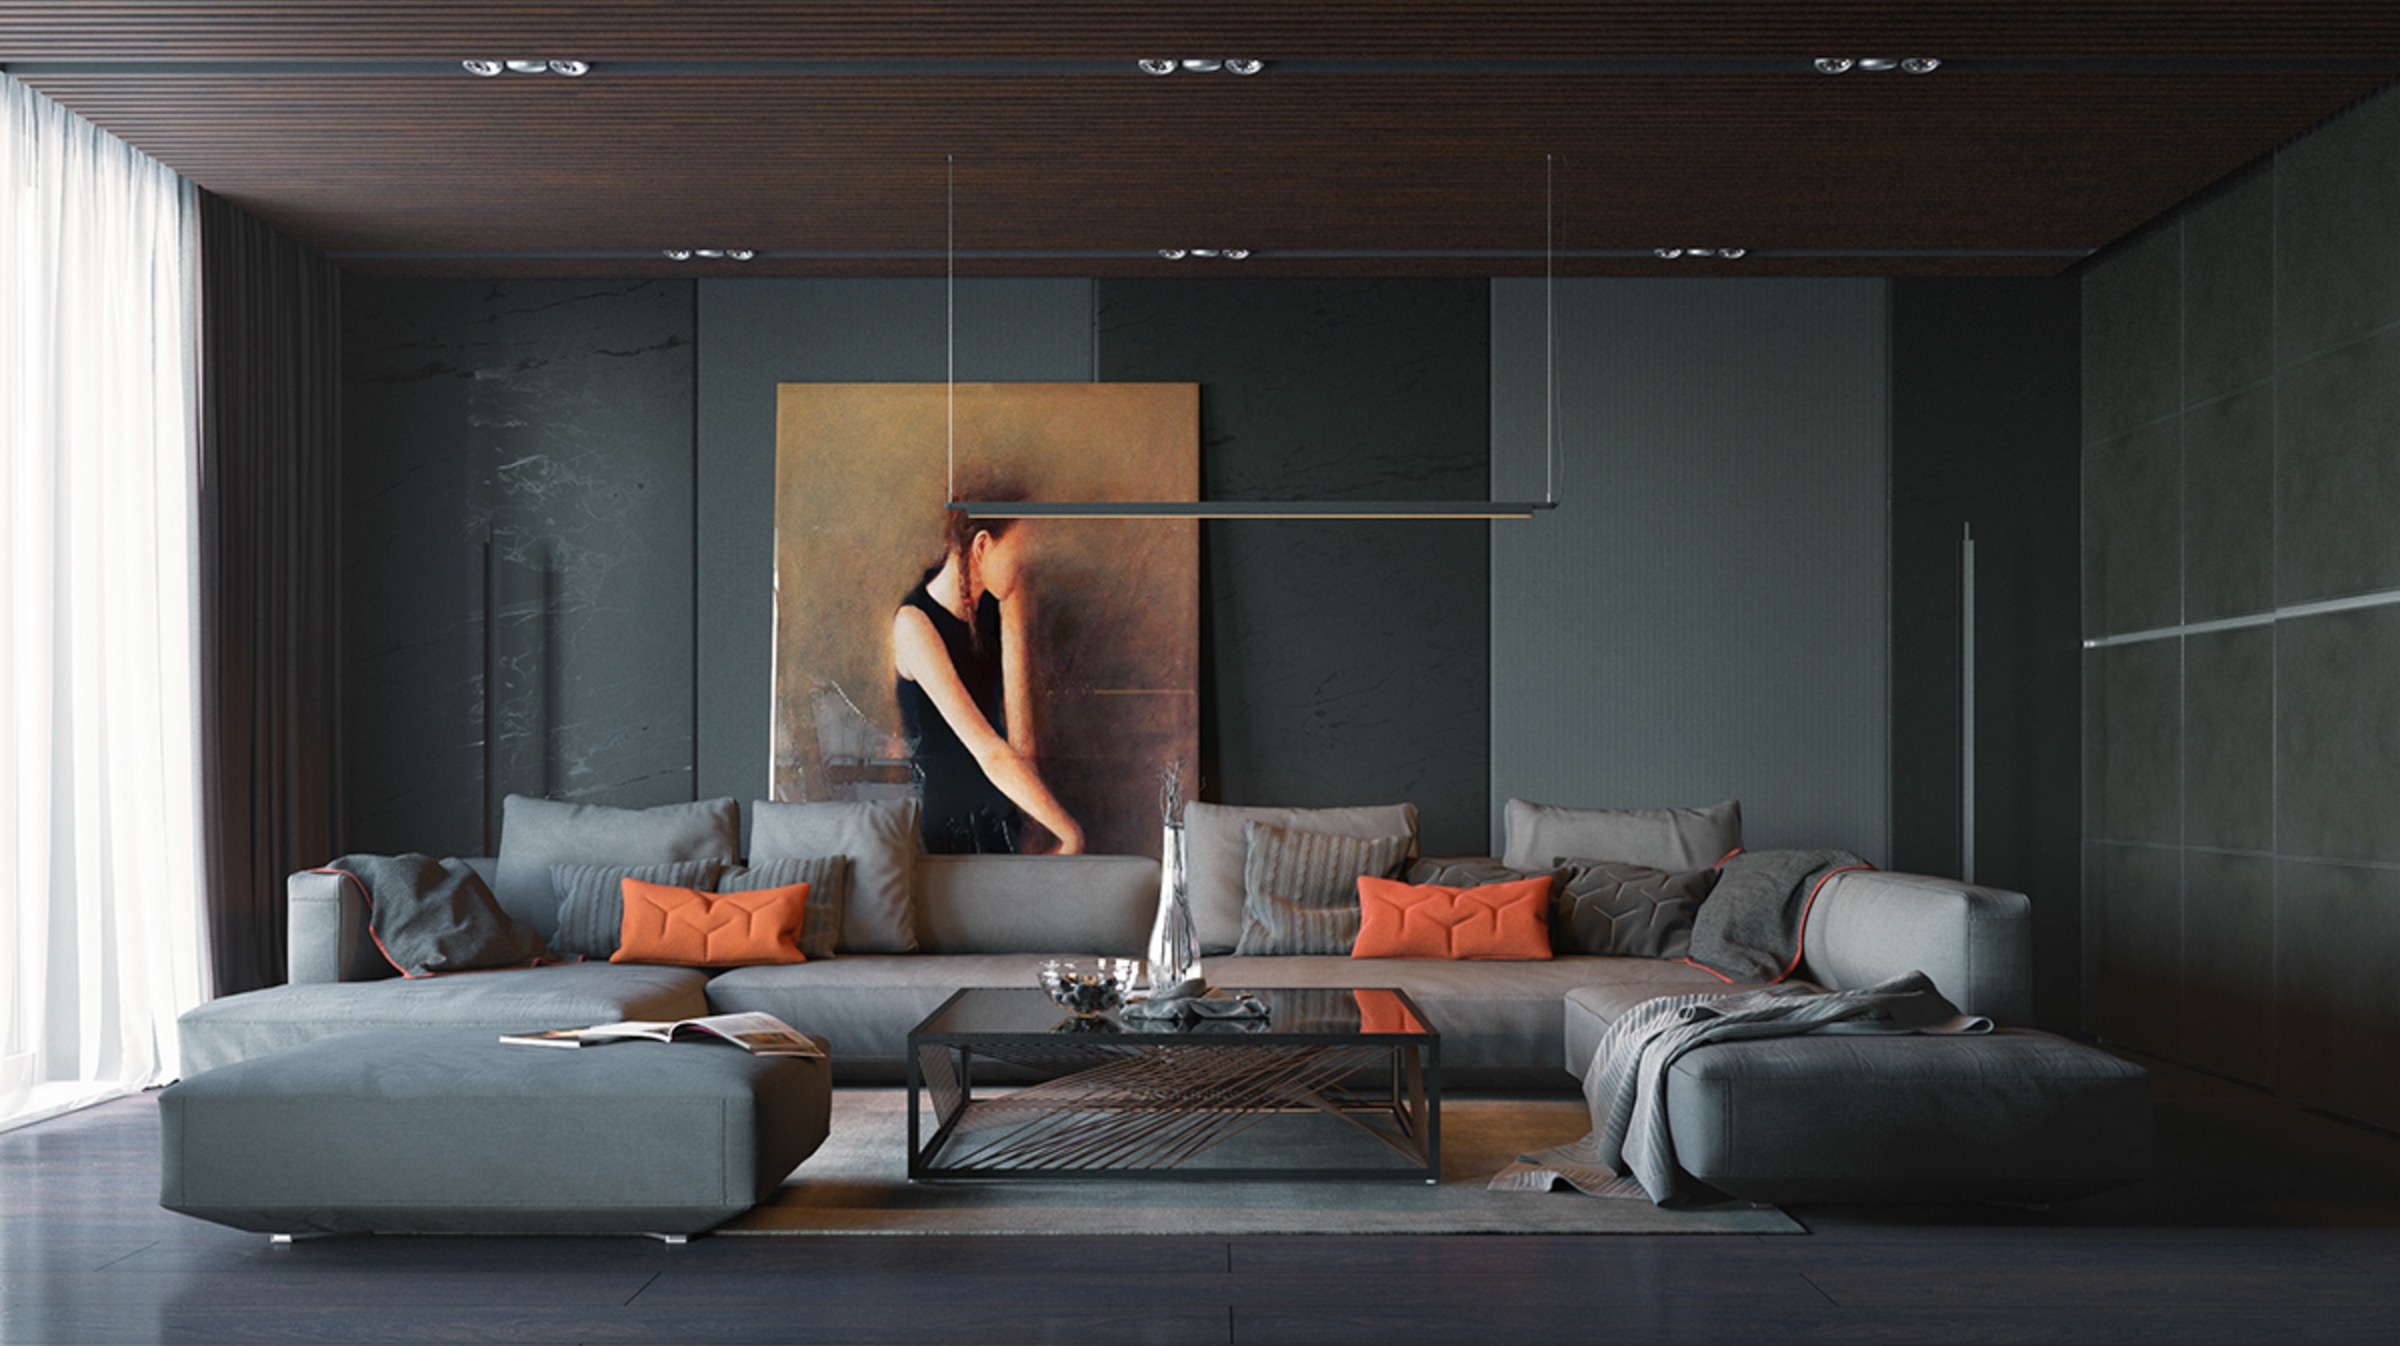 Interior Design Large Wall Art for Living Room: Ideas & Inspiration HCGPBKT